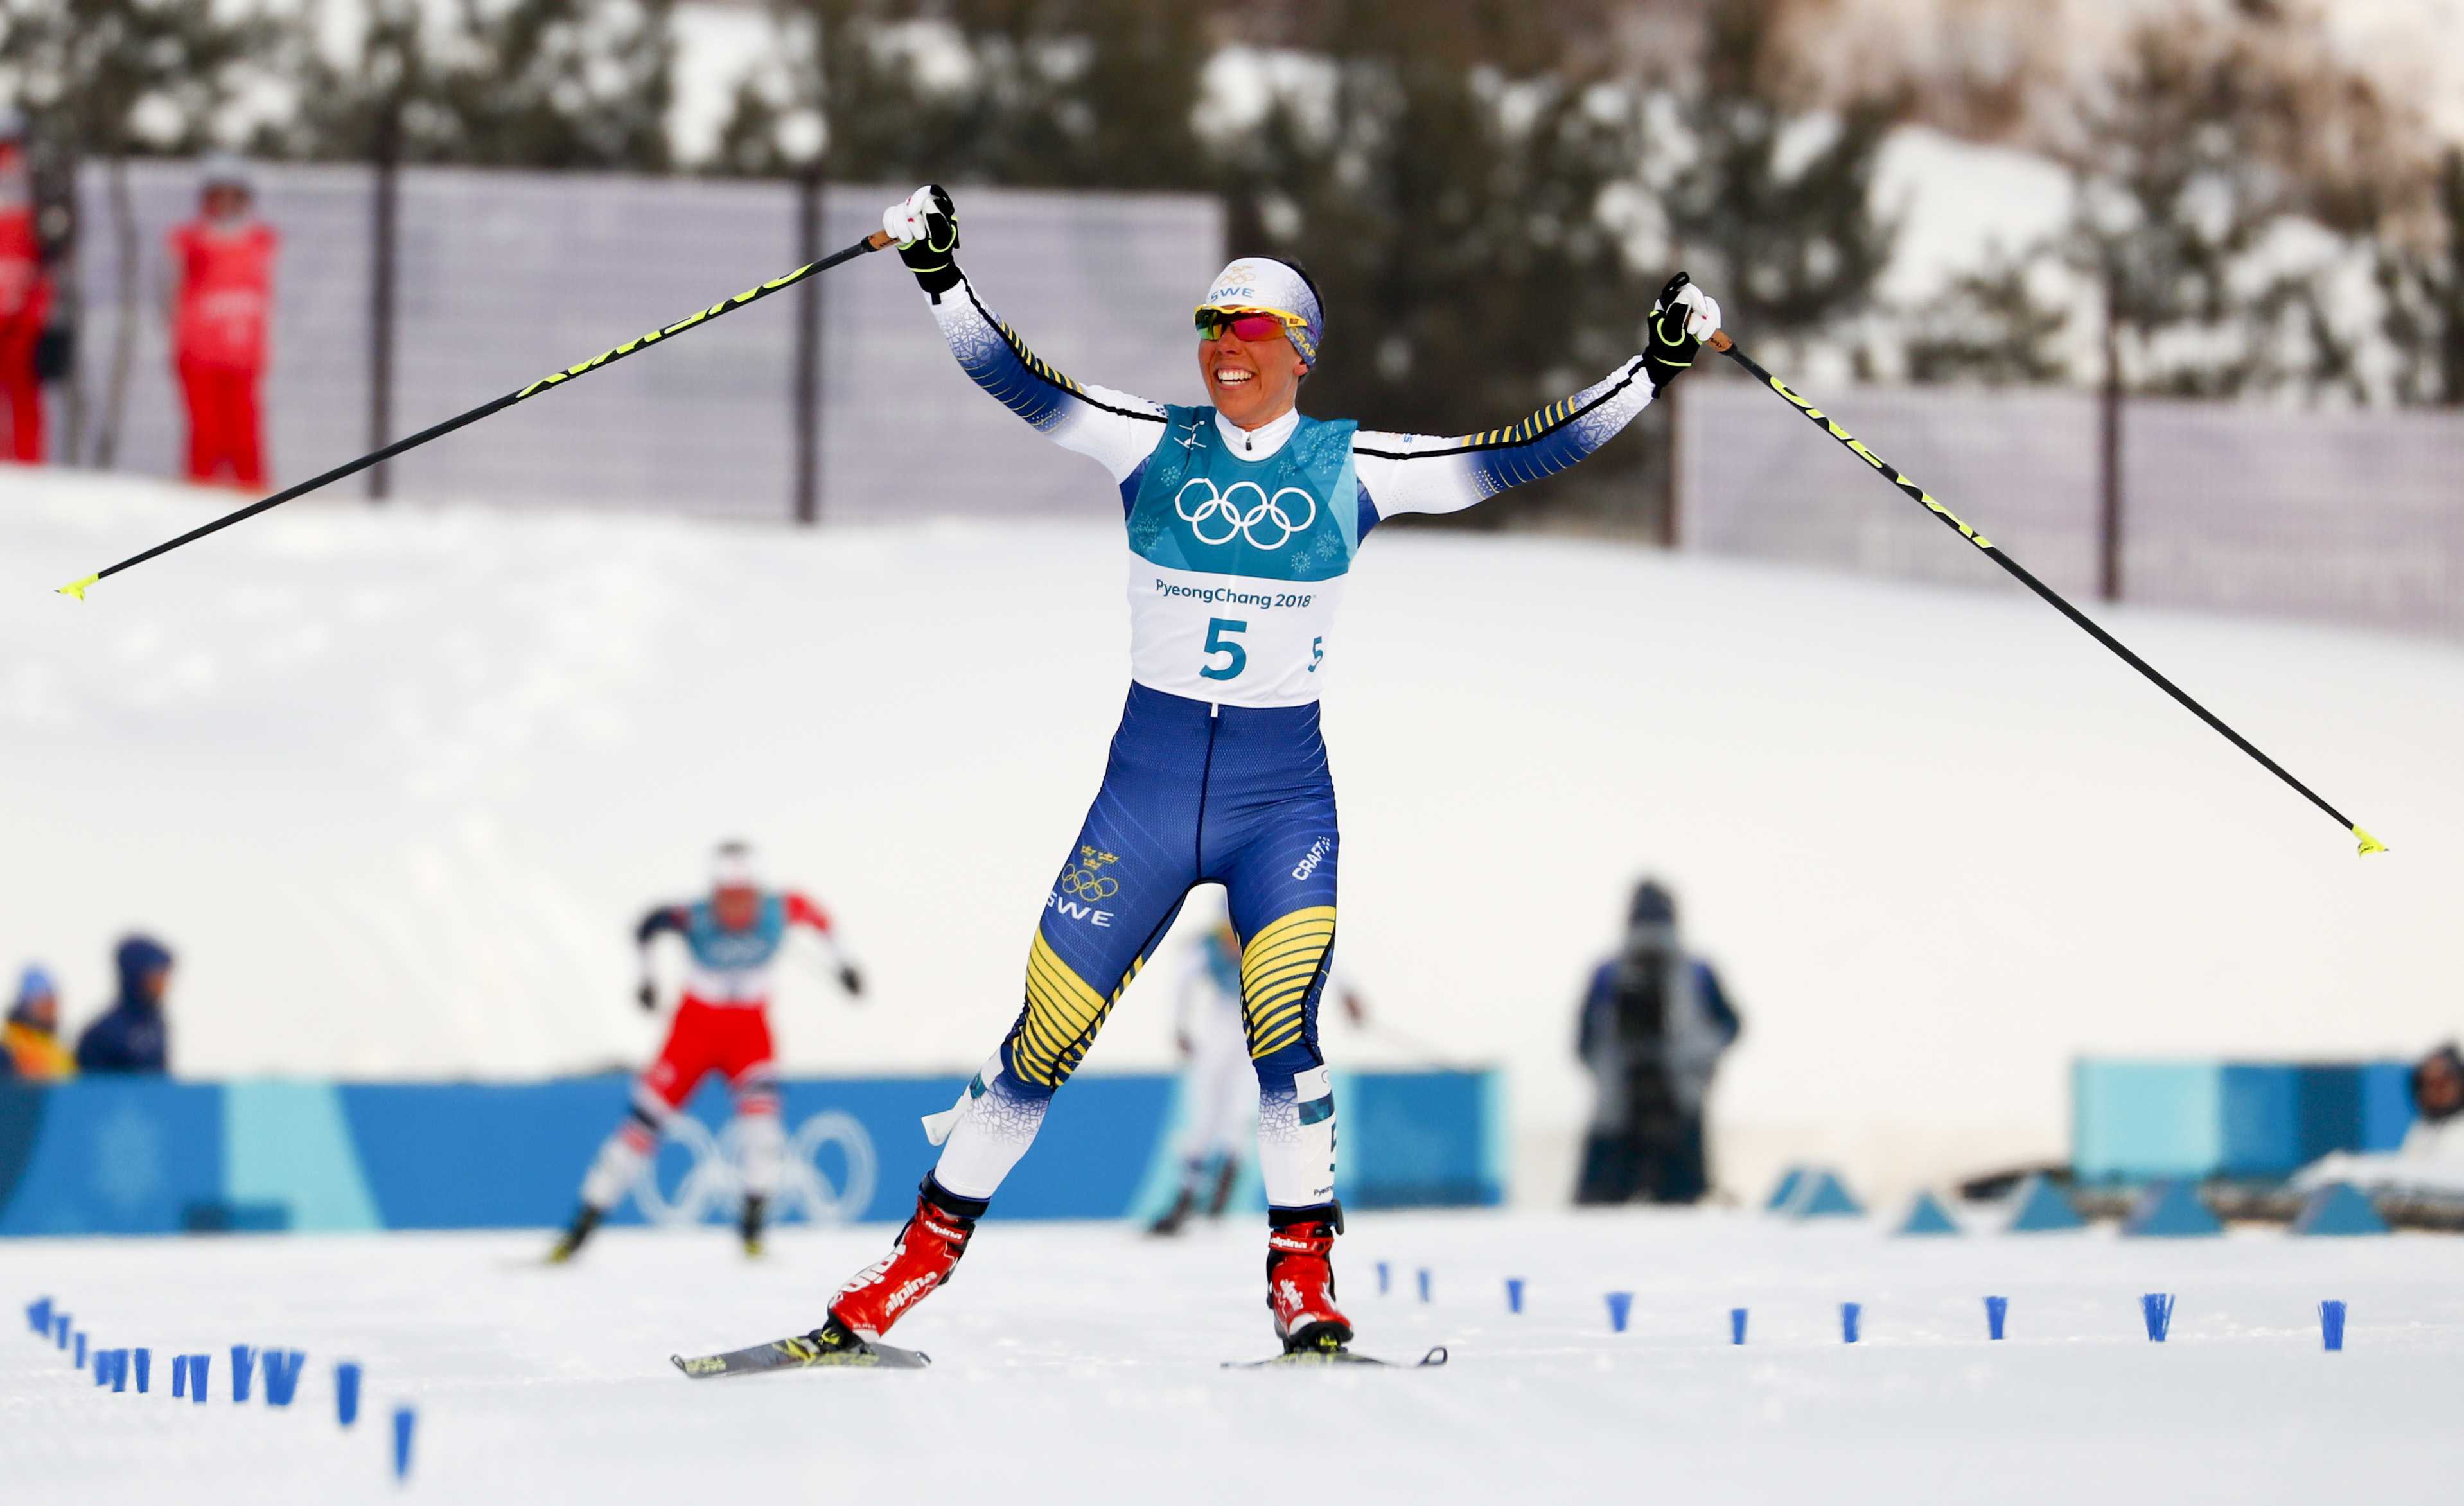 Kalla wins, Bjoergen makes history at Winter Olympics